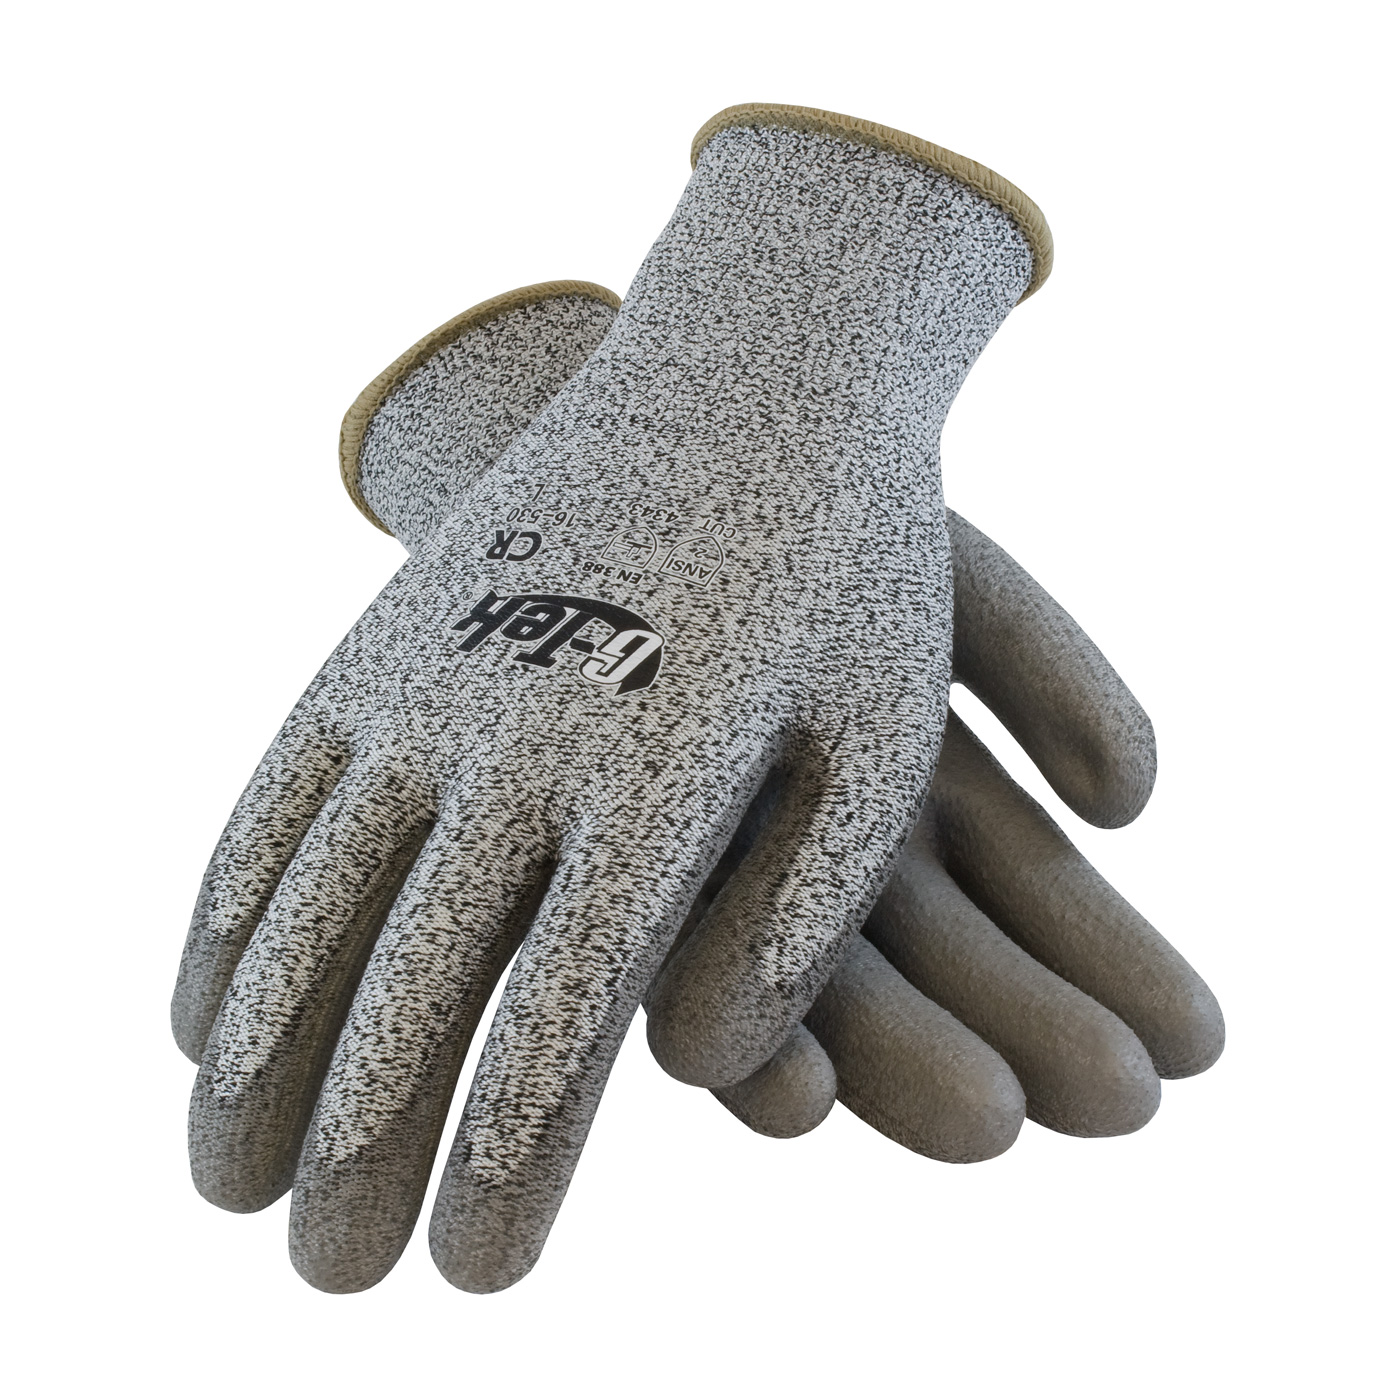 PIP 34-846 MaxiFlex Endurance Seamless Knit Nylon Nitrile Coated Microfoam Grip on Full Hand - Micro Dot Palm